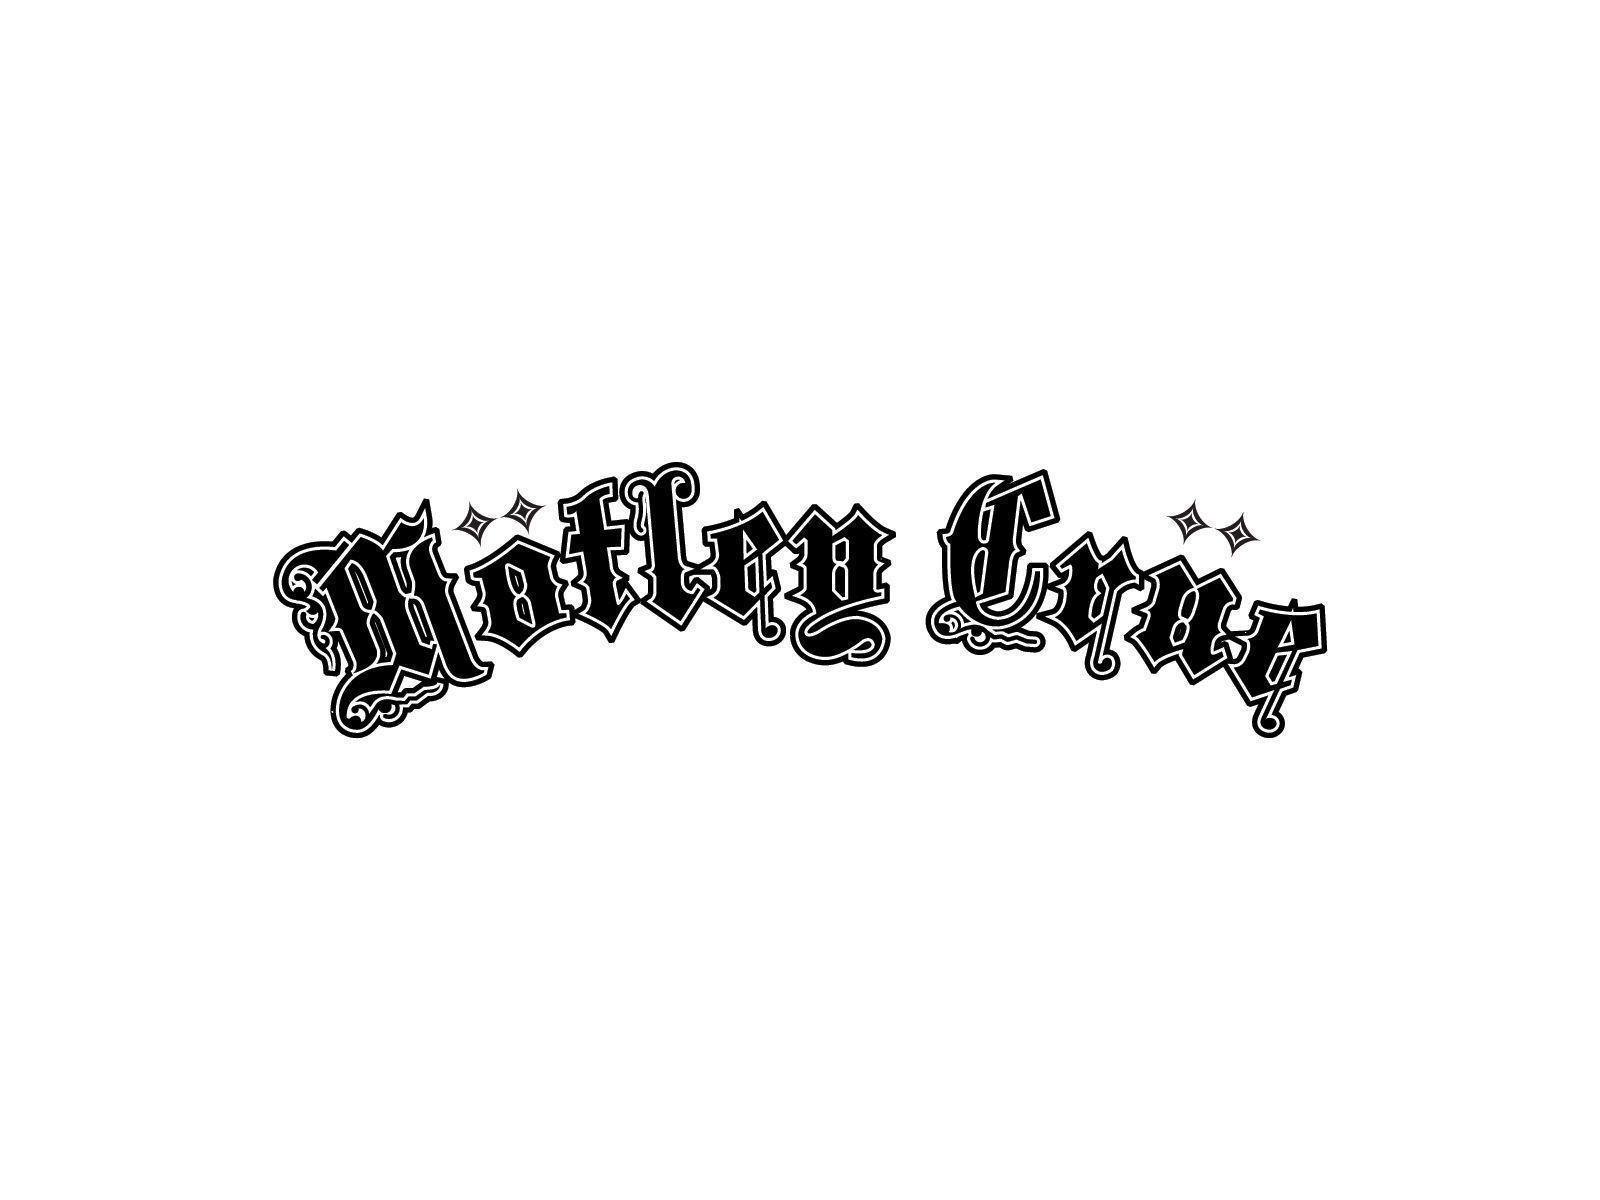 Motley Crue logo and wallpaper. Band logos band logos